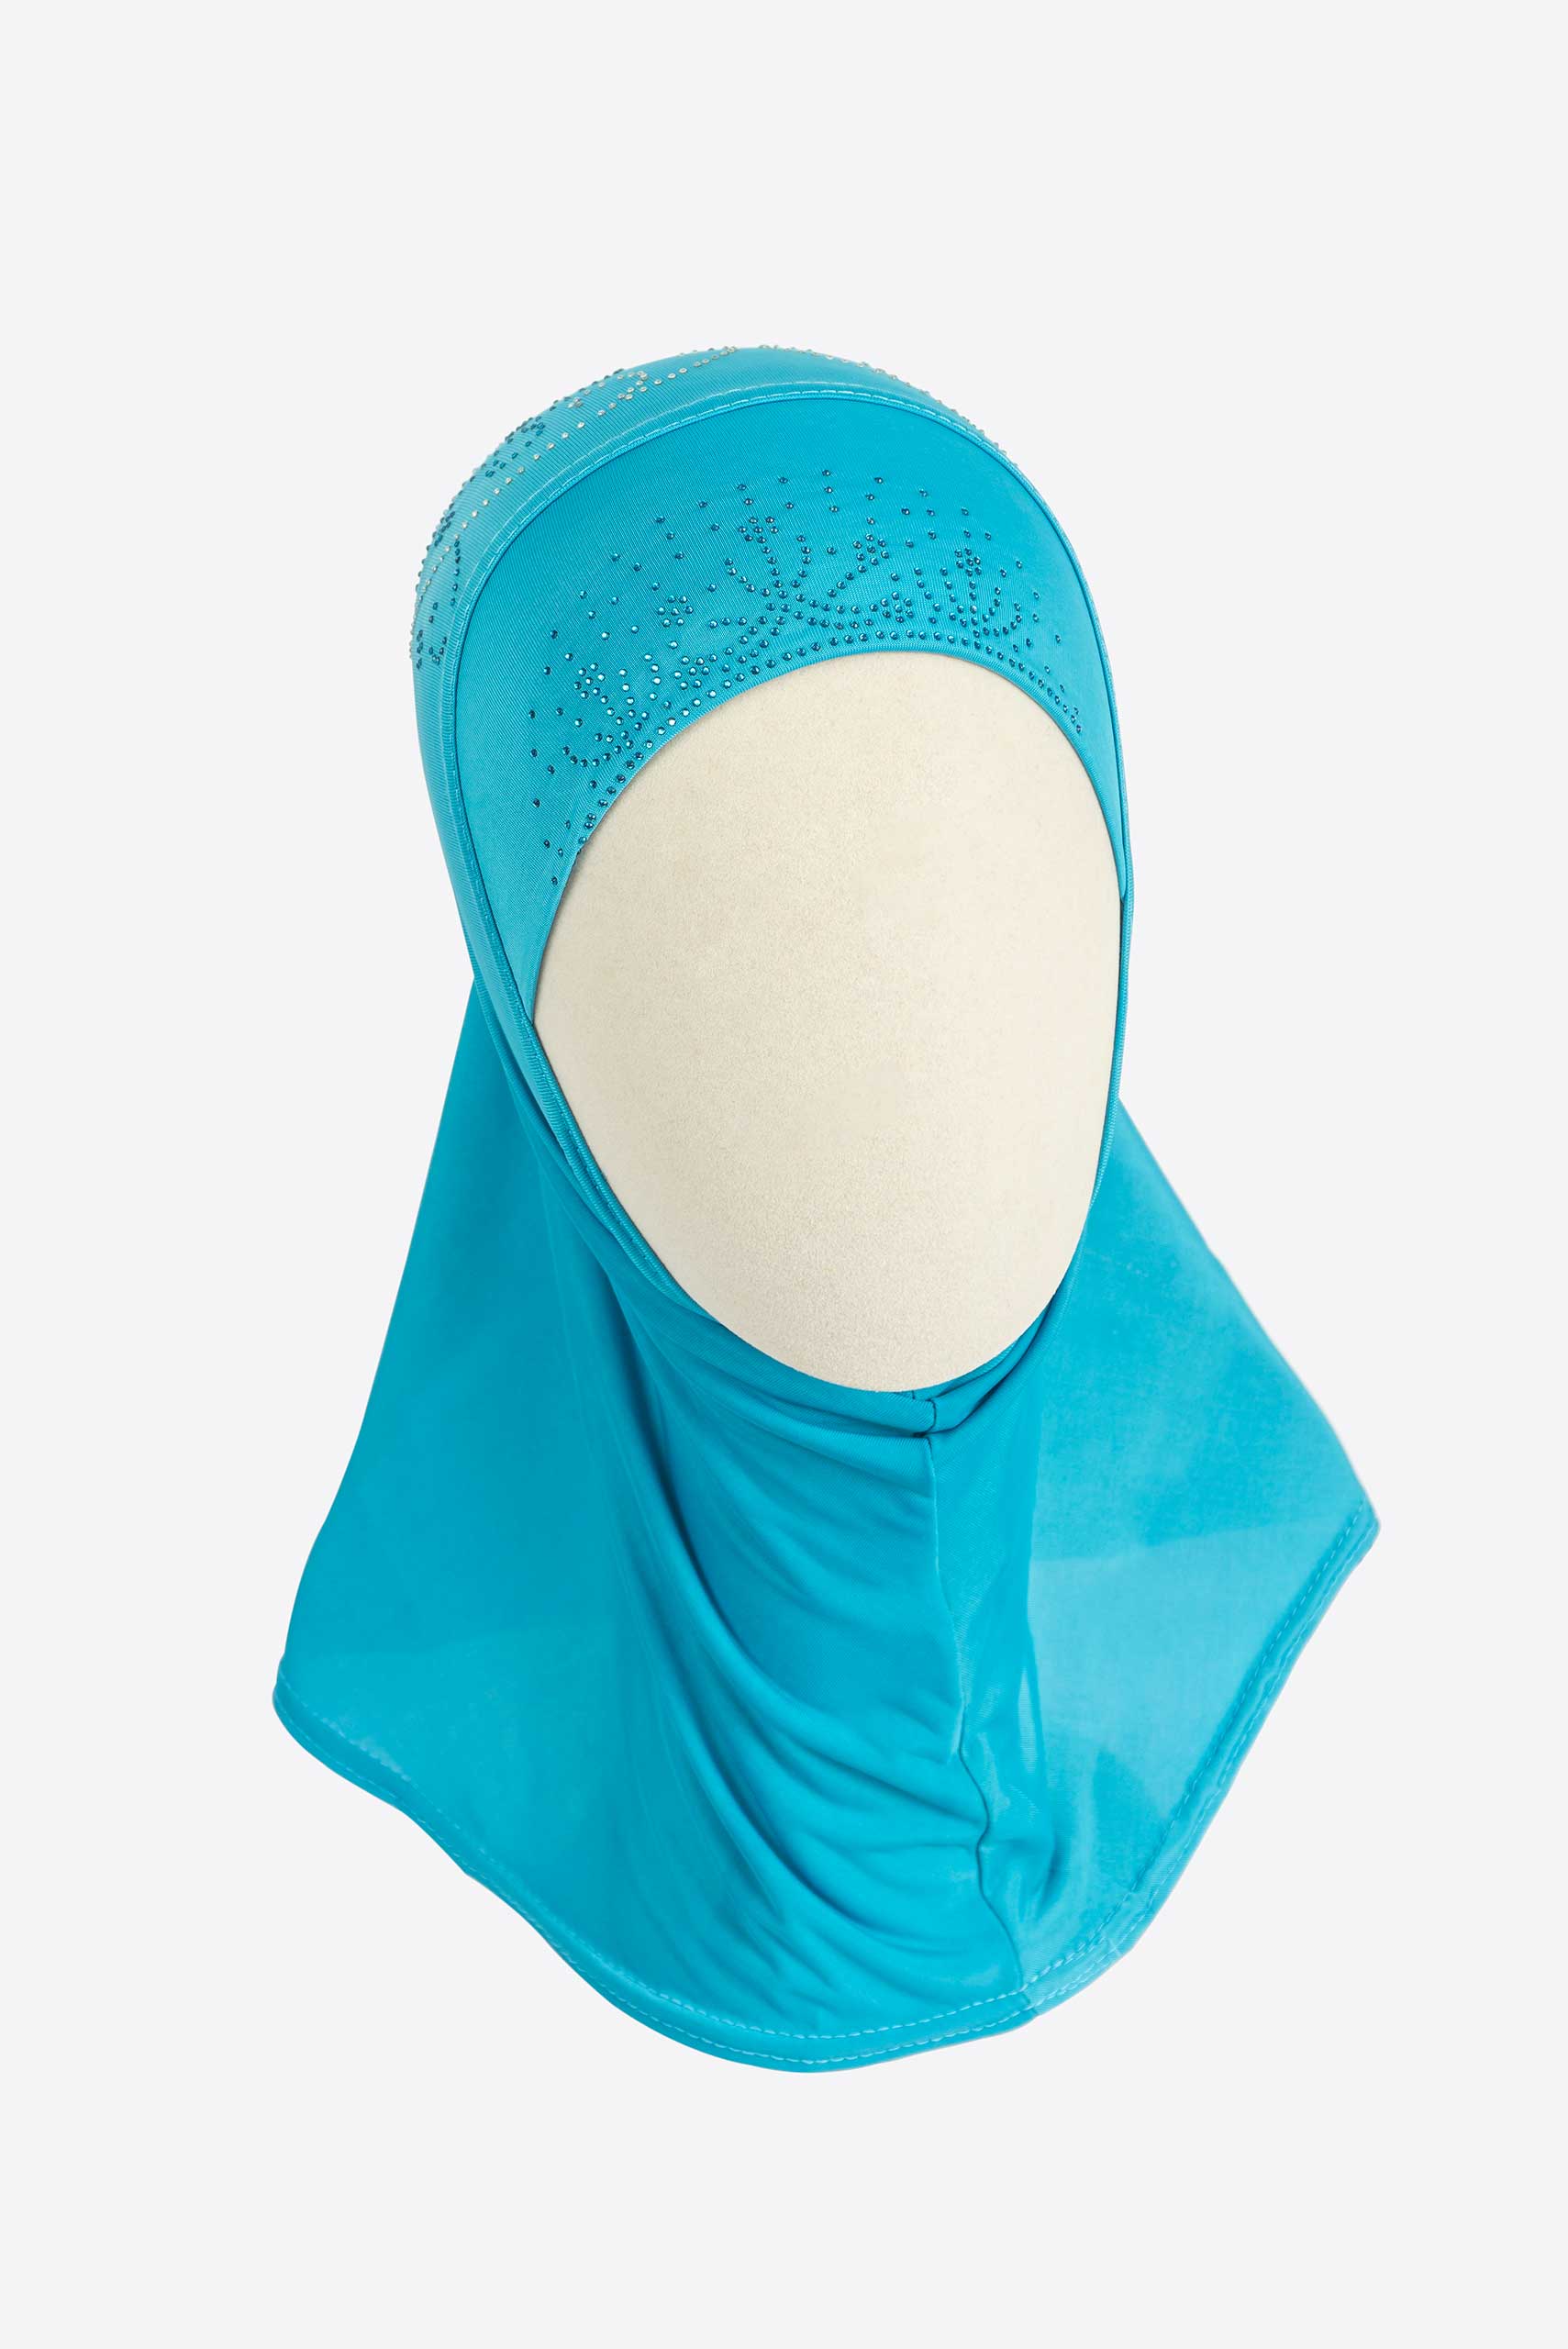 Swirl Hijab Scarf - Hijab Scarf - Muslim Lifestyle Store